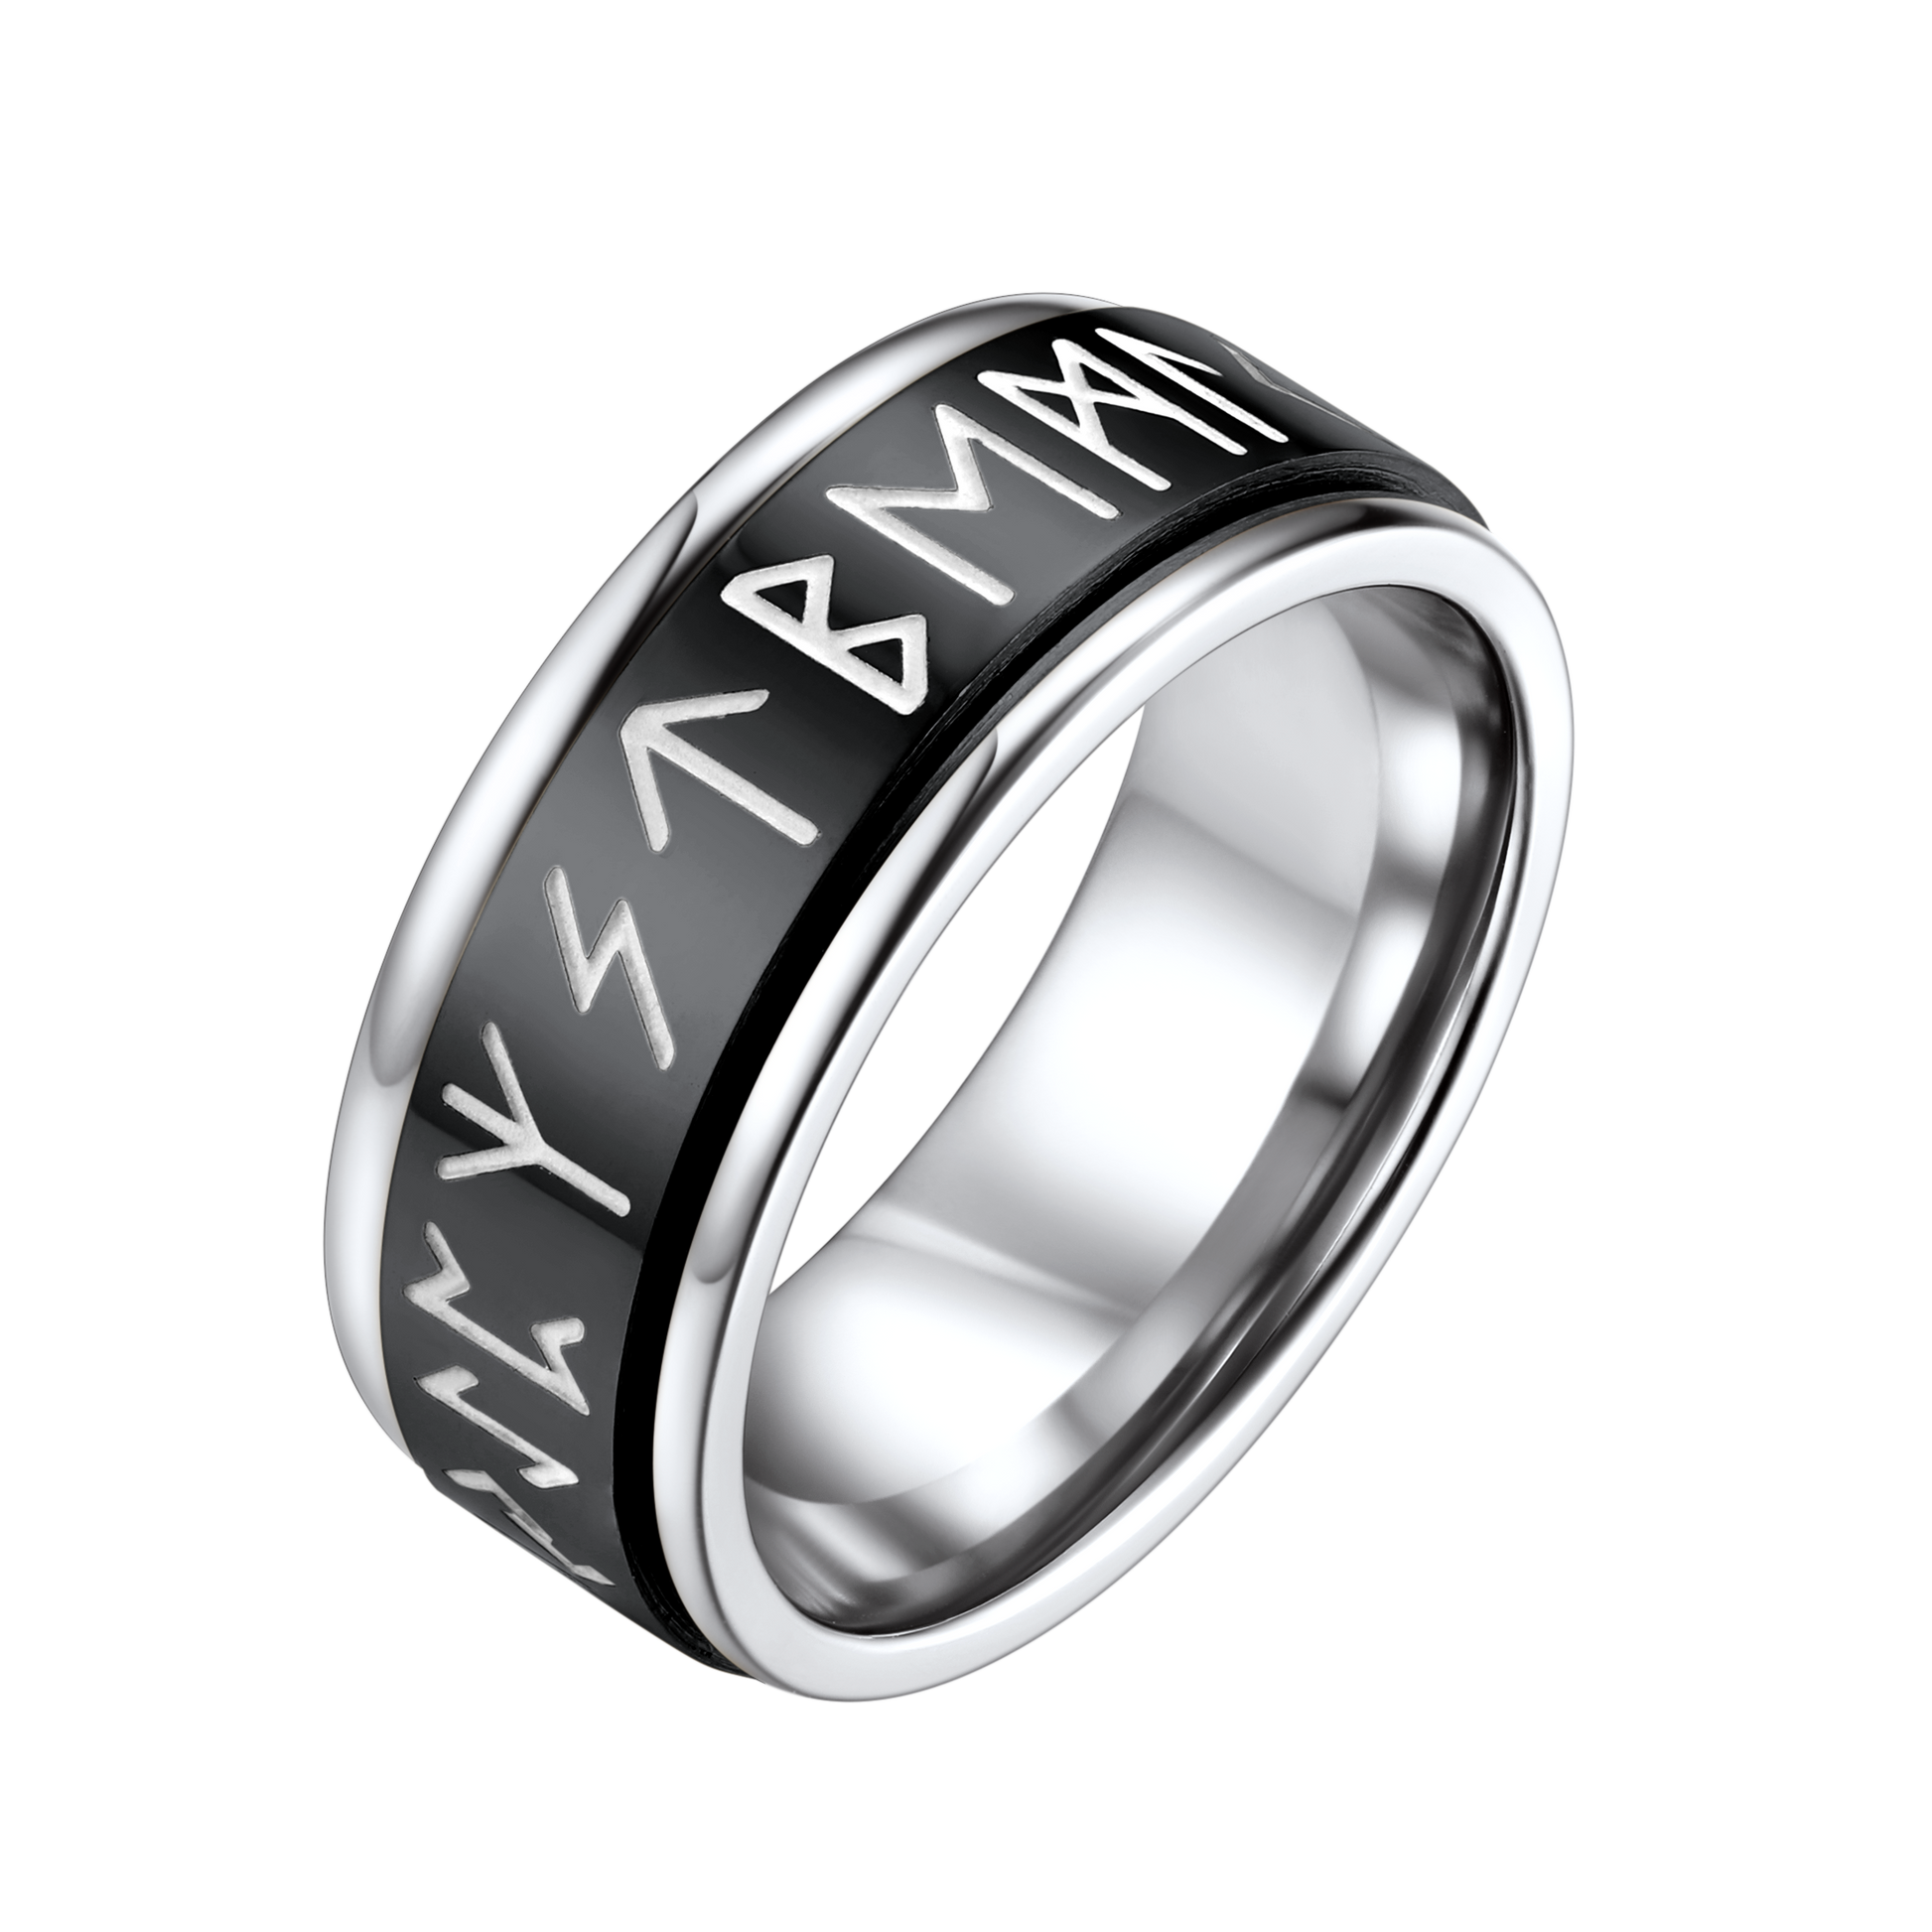 FaithHeart Viking Rune Ring Anxiety Ring For Men FaithHeart